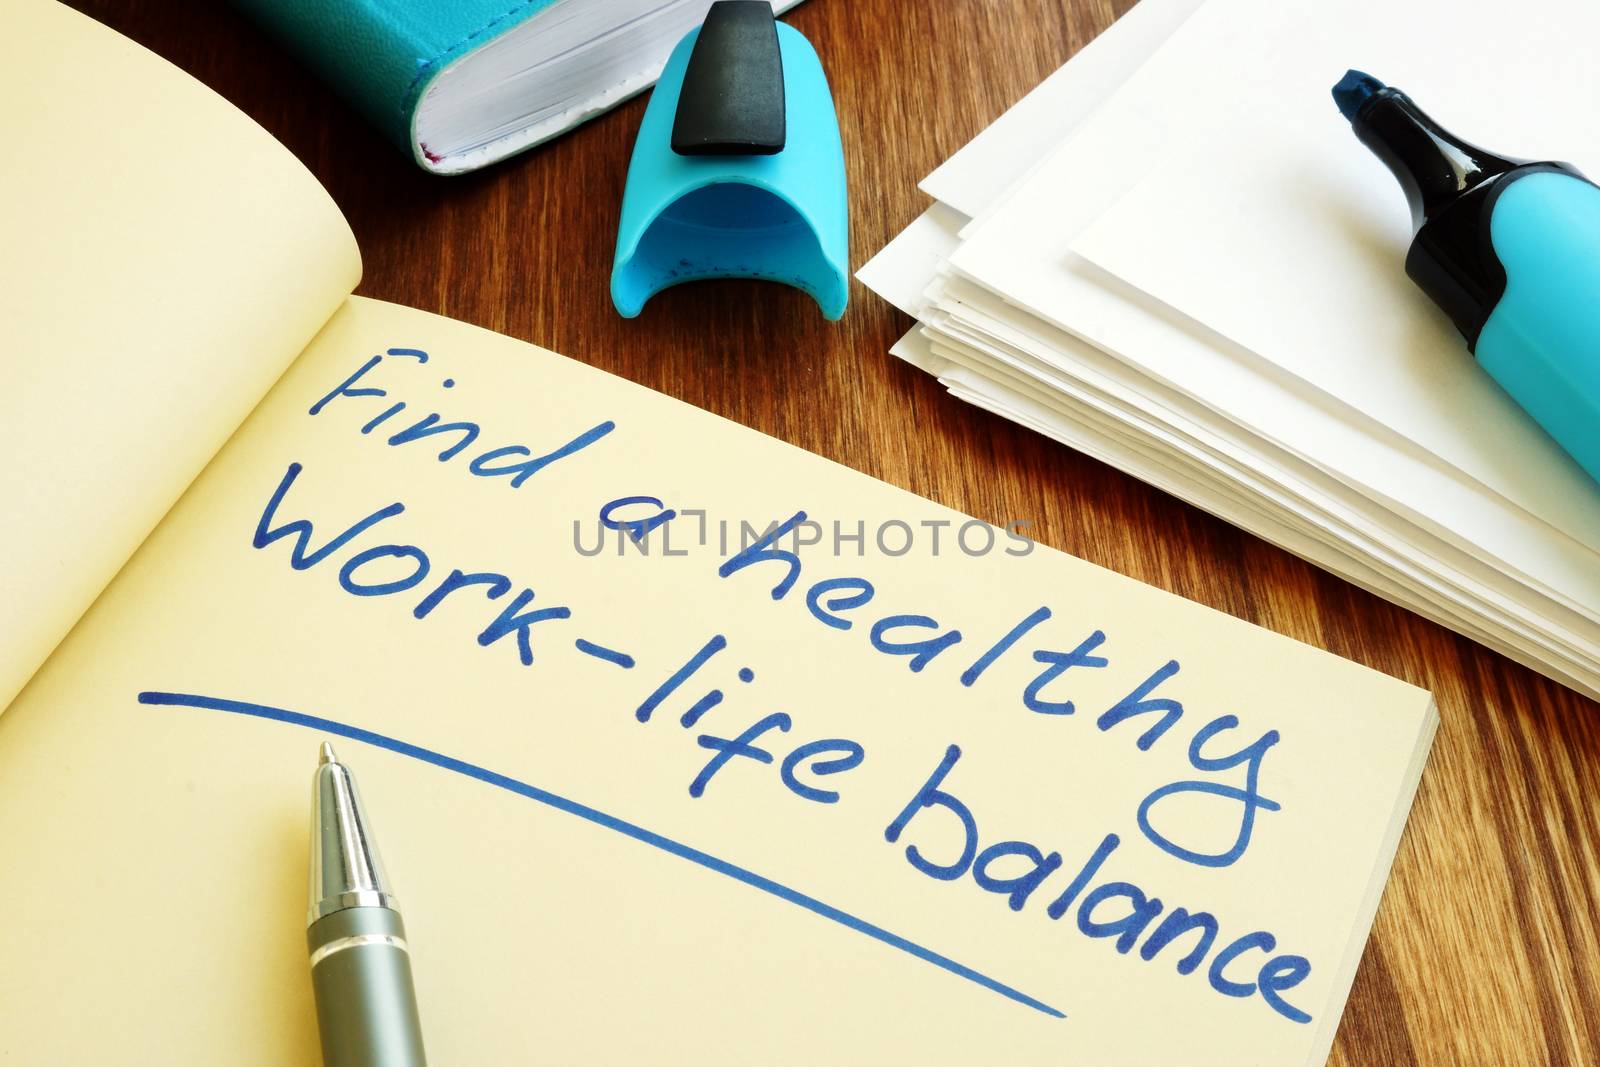 Find a healthy work-life balance motivation sign. by designer491